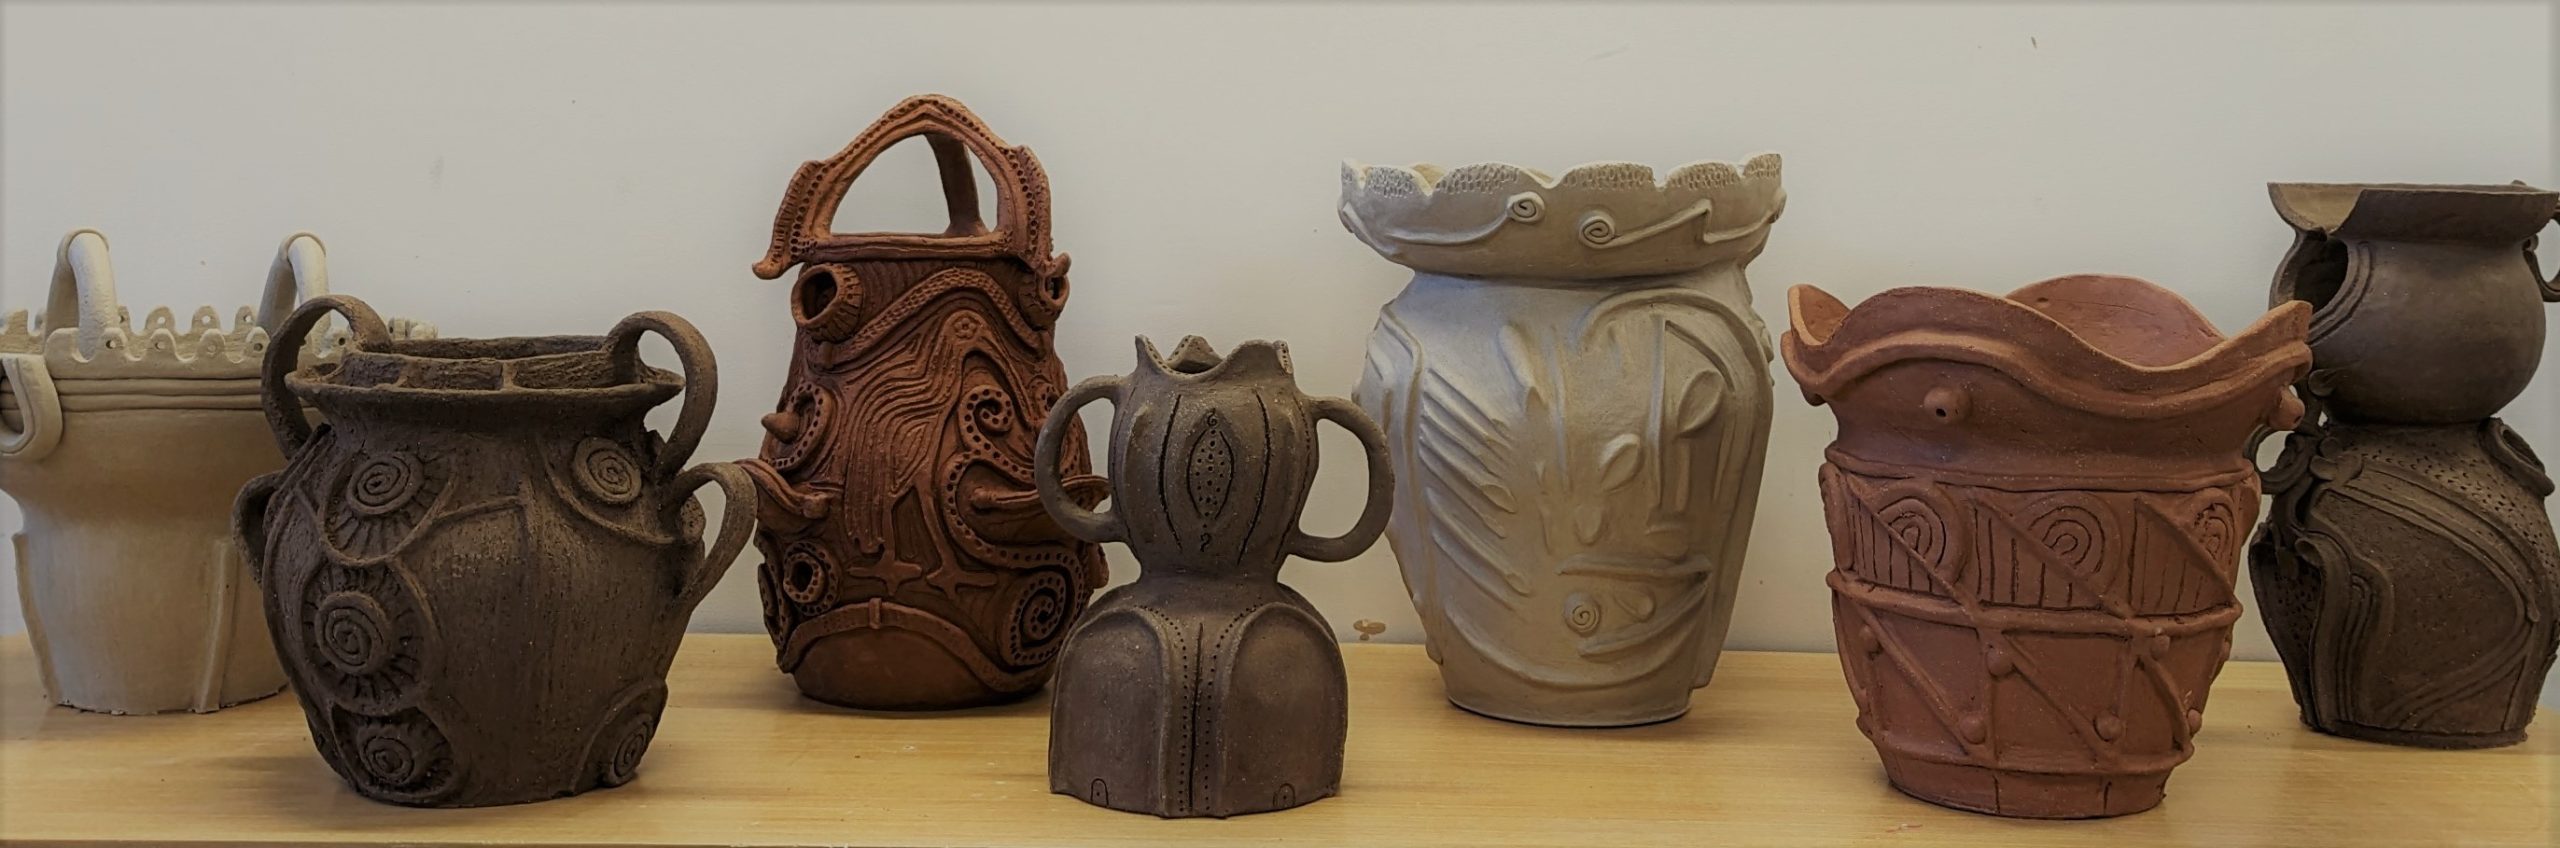 Creative Handbuilding - Inspired by Ancient Ceramics